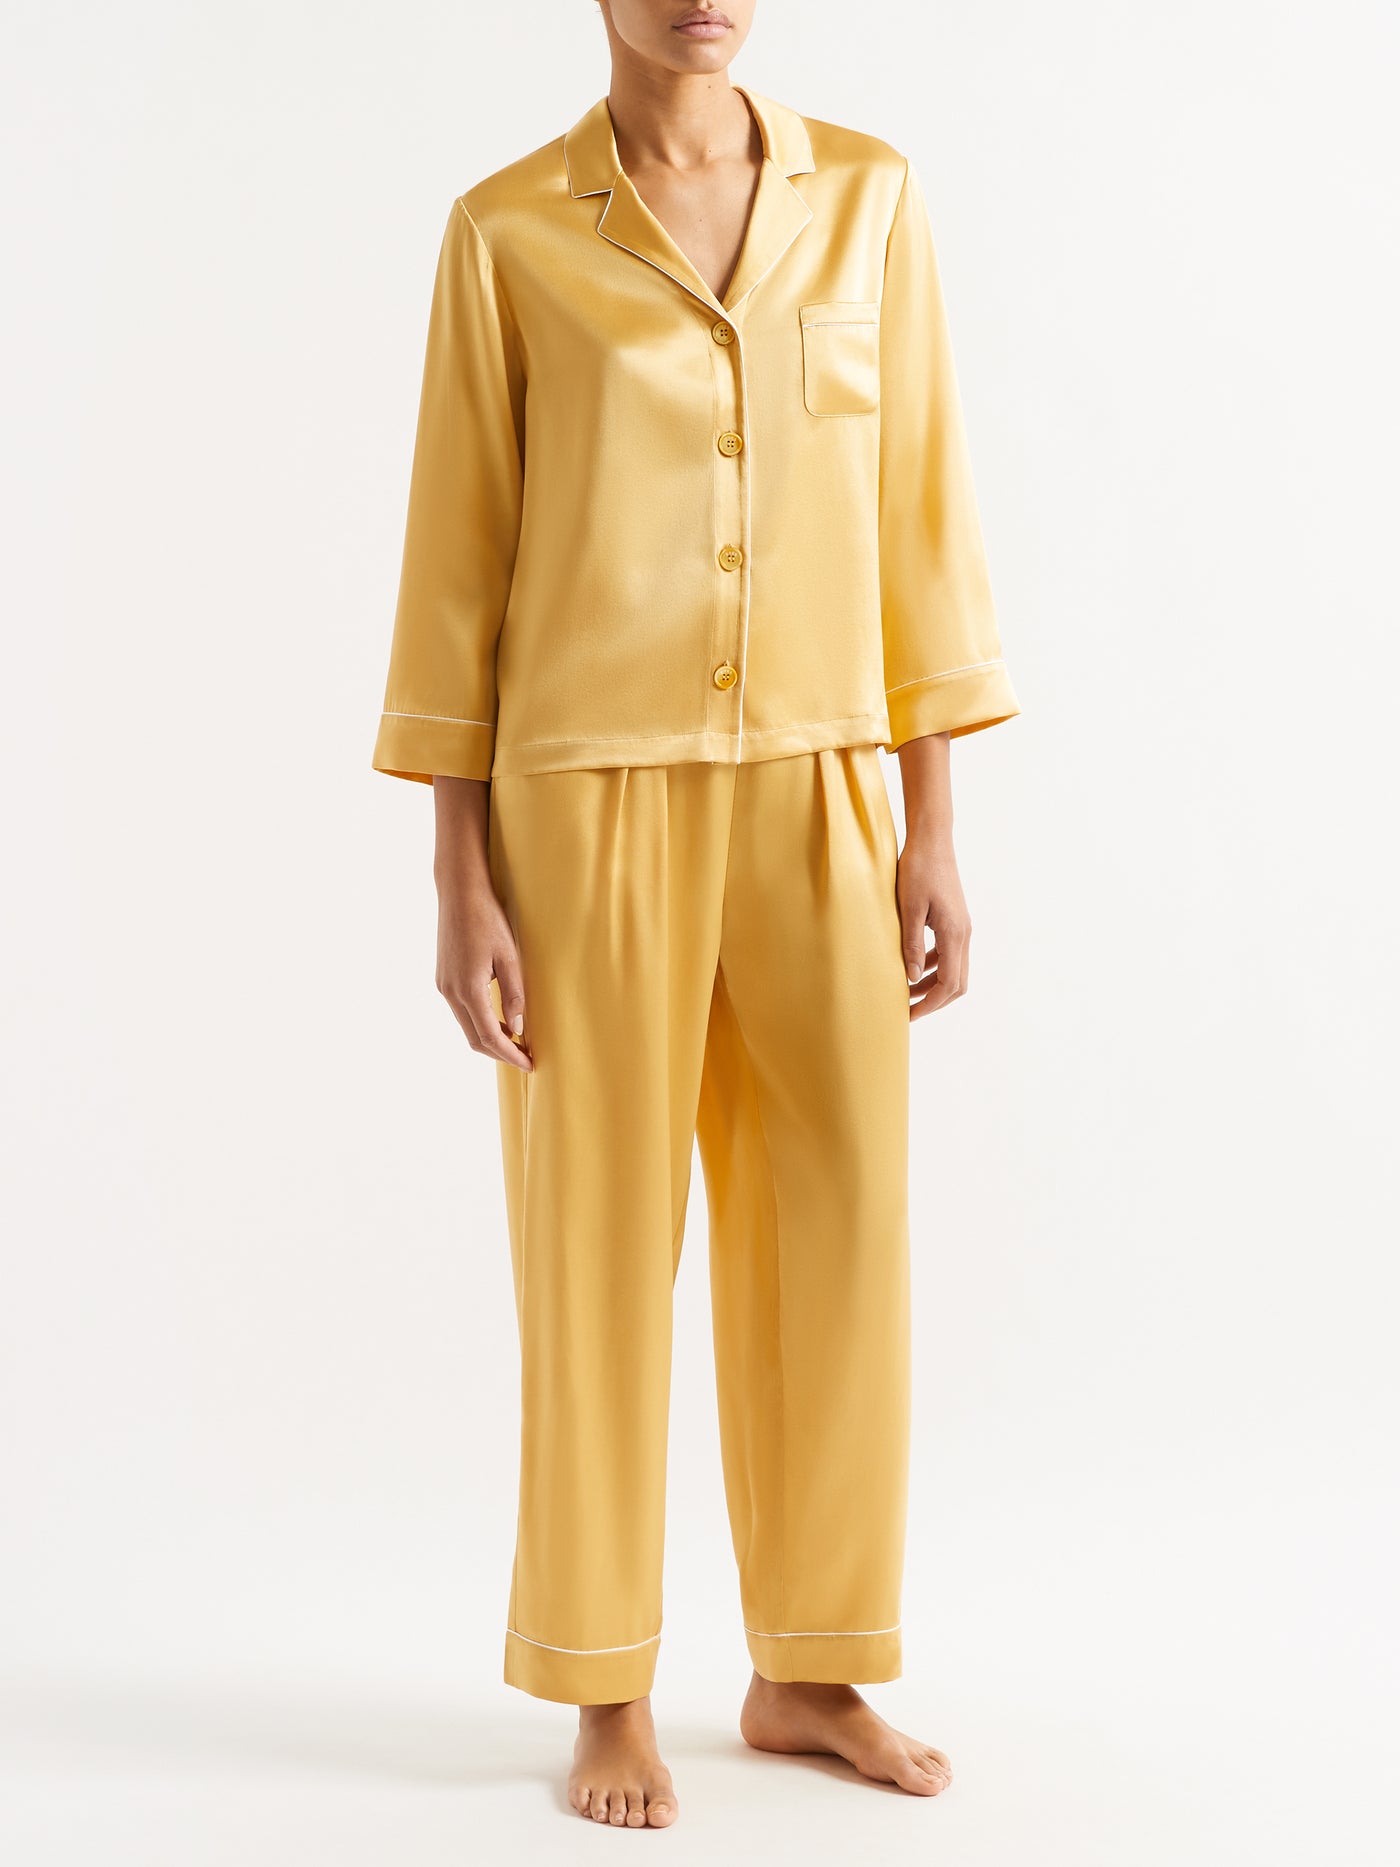 Eres-Rire-Pijama-Shirt-Yellow-Amarees